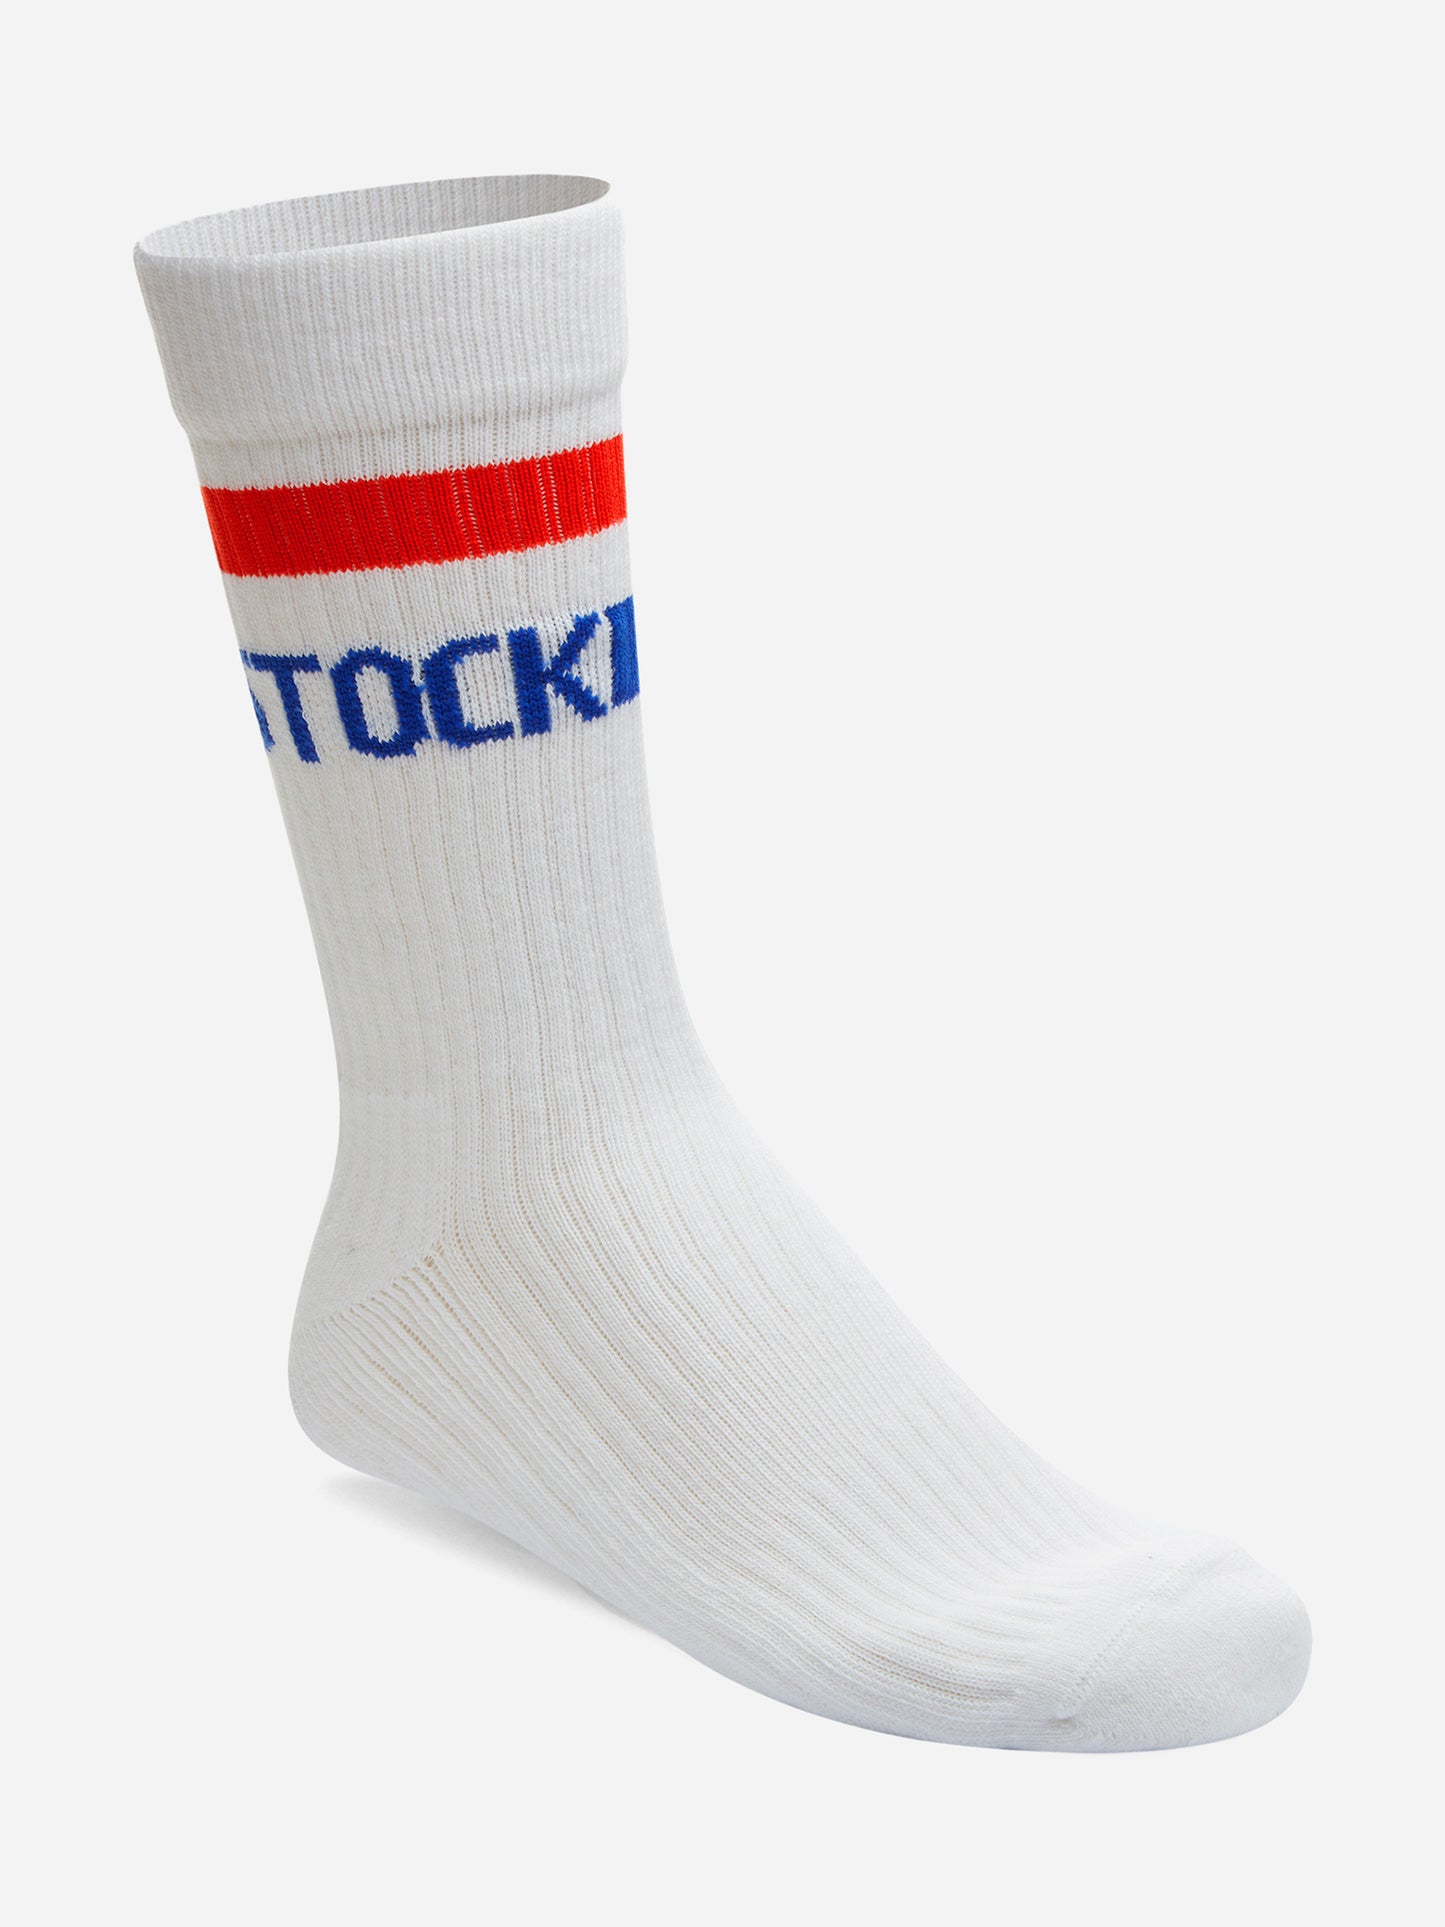 Birkenstock Women's Tennis Socks